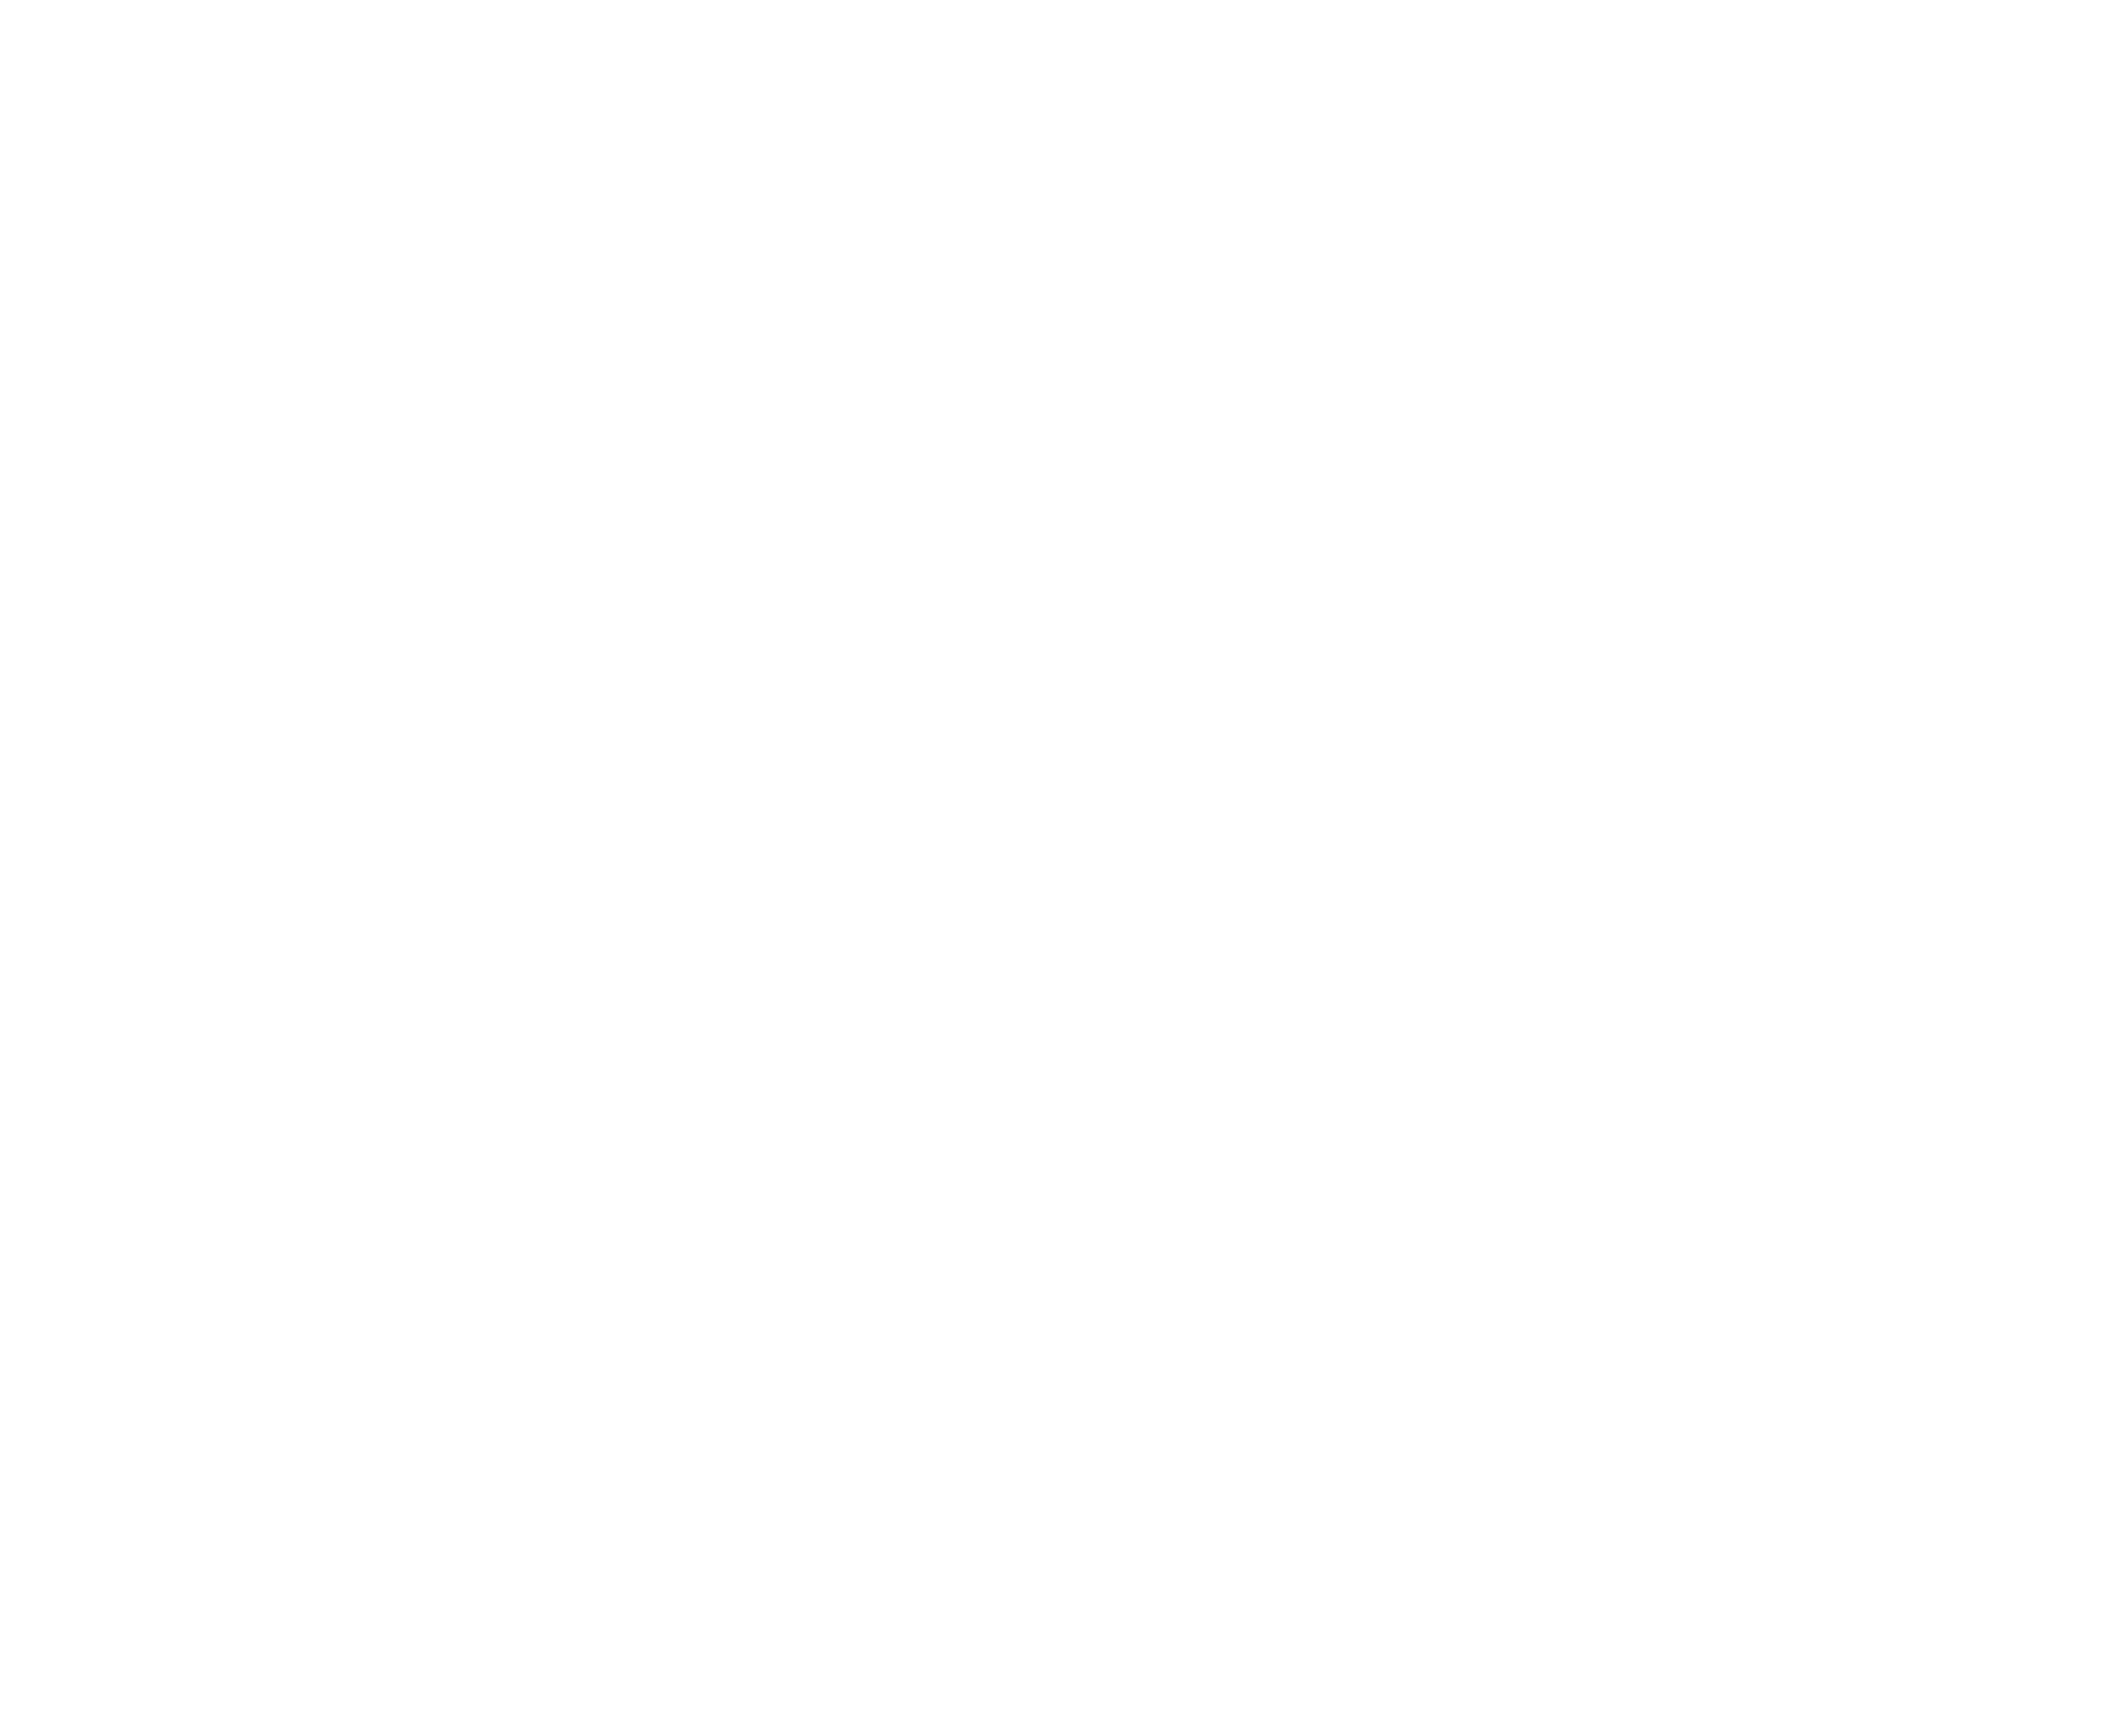 nissan-logo-2020-white (1).png